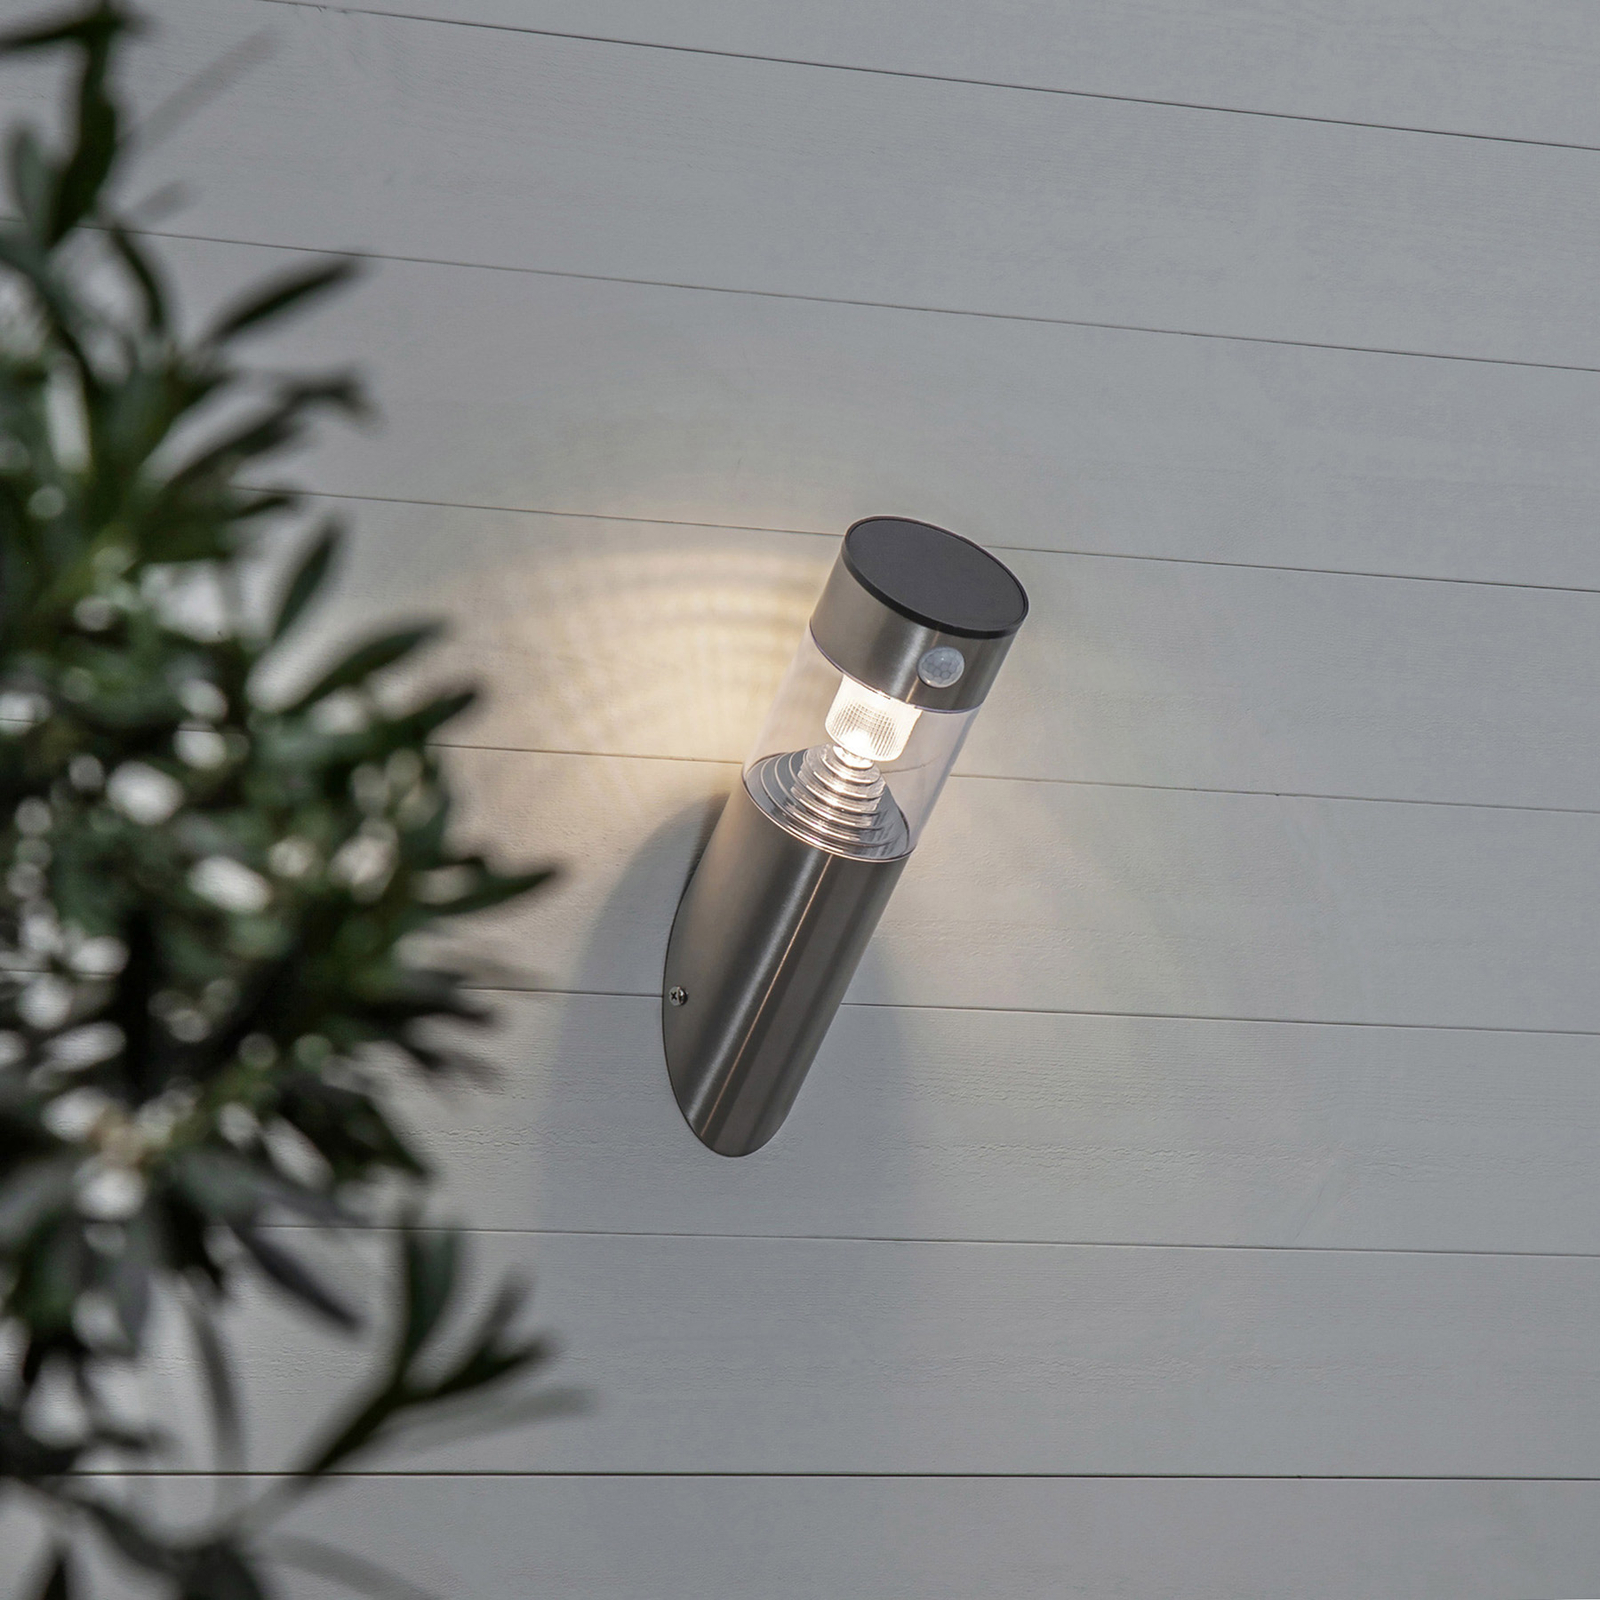 Marbella LED solar wall light with a motion sensor